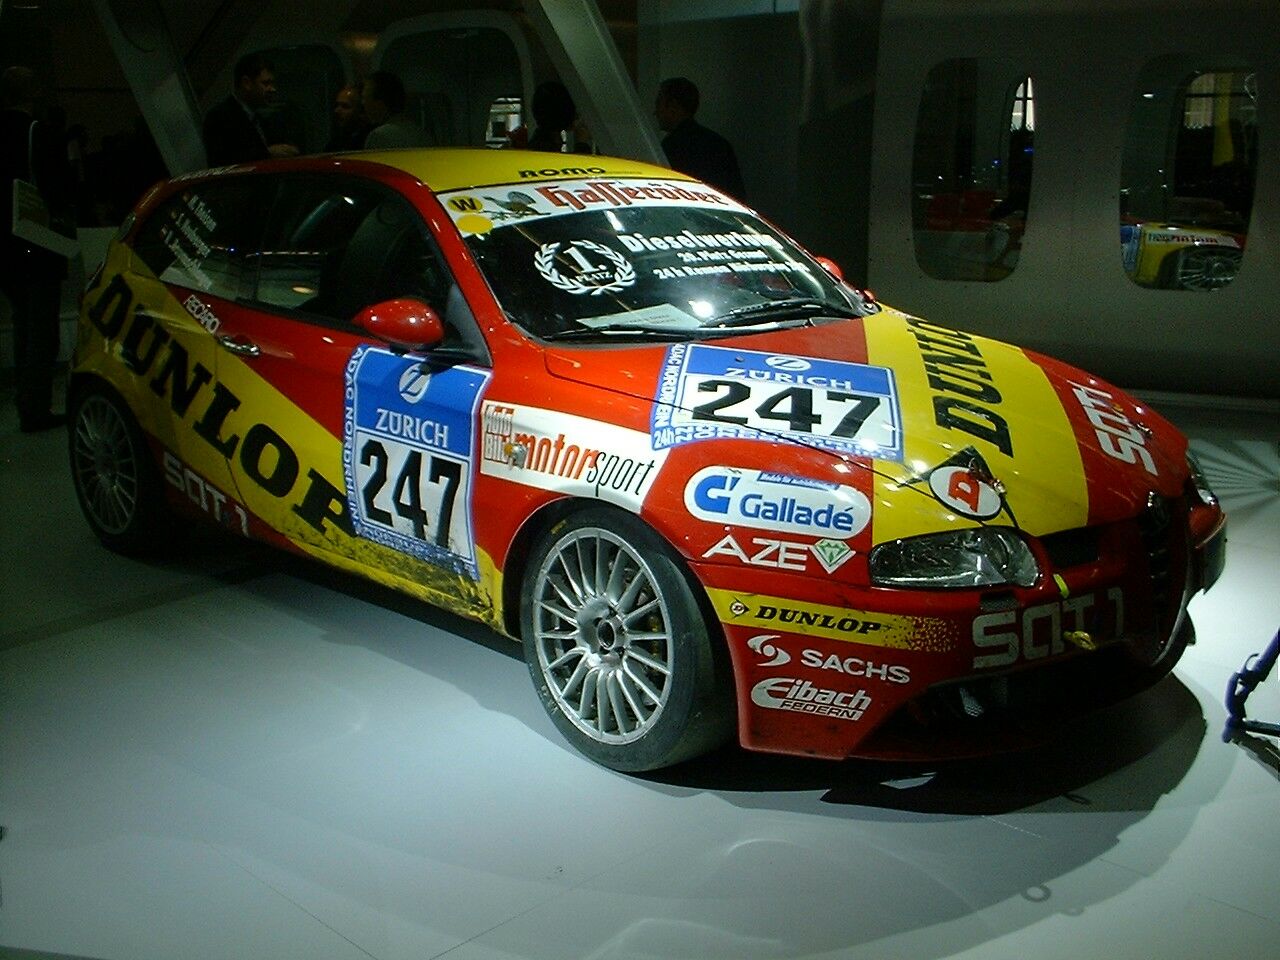 N-Technology developed prototype Alfa Romeo 147JTD race car at the 2003 Frankfurt Motor Show